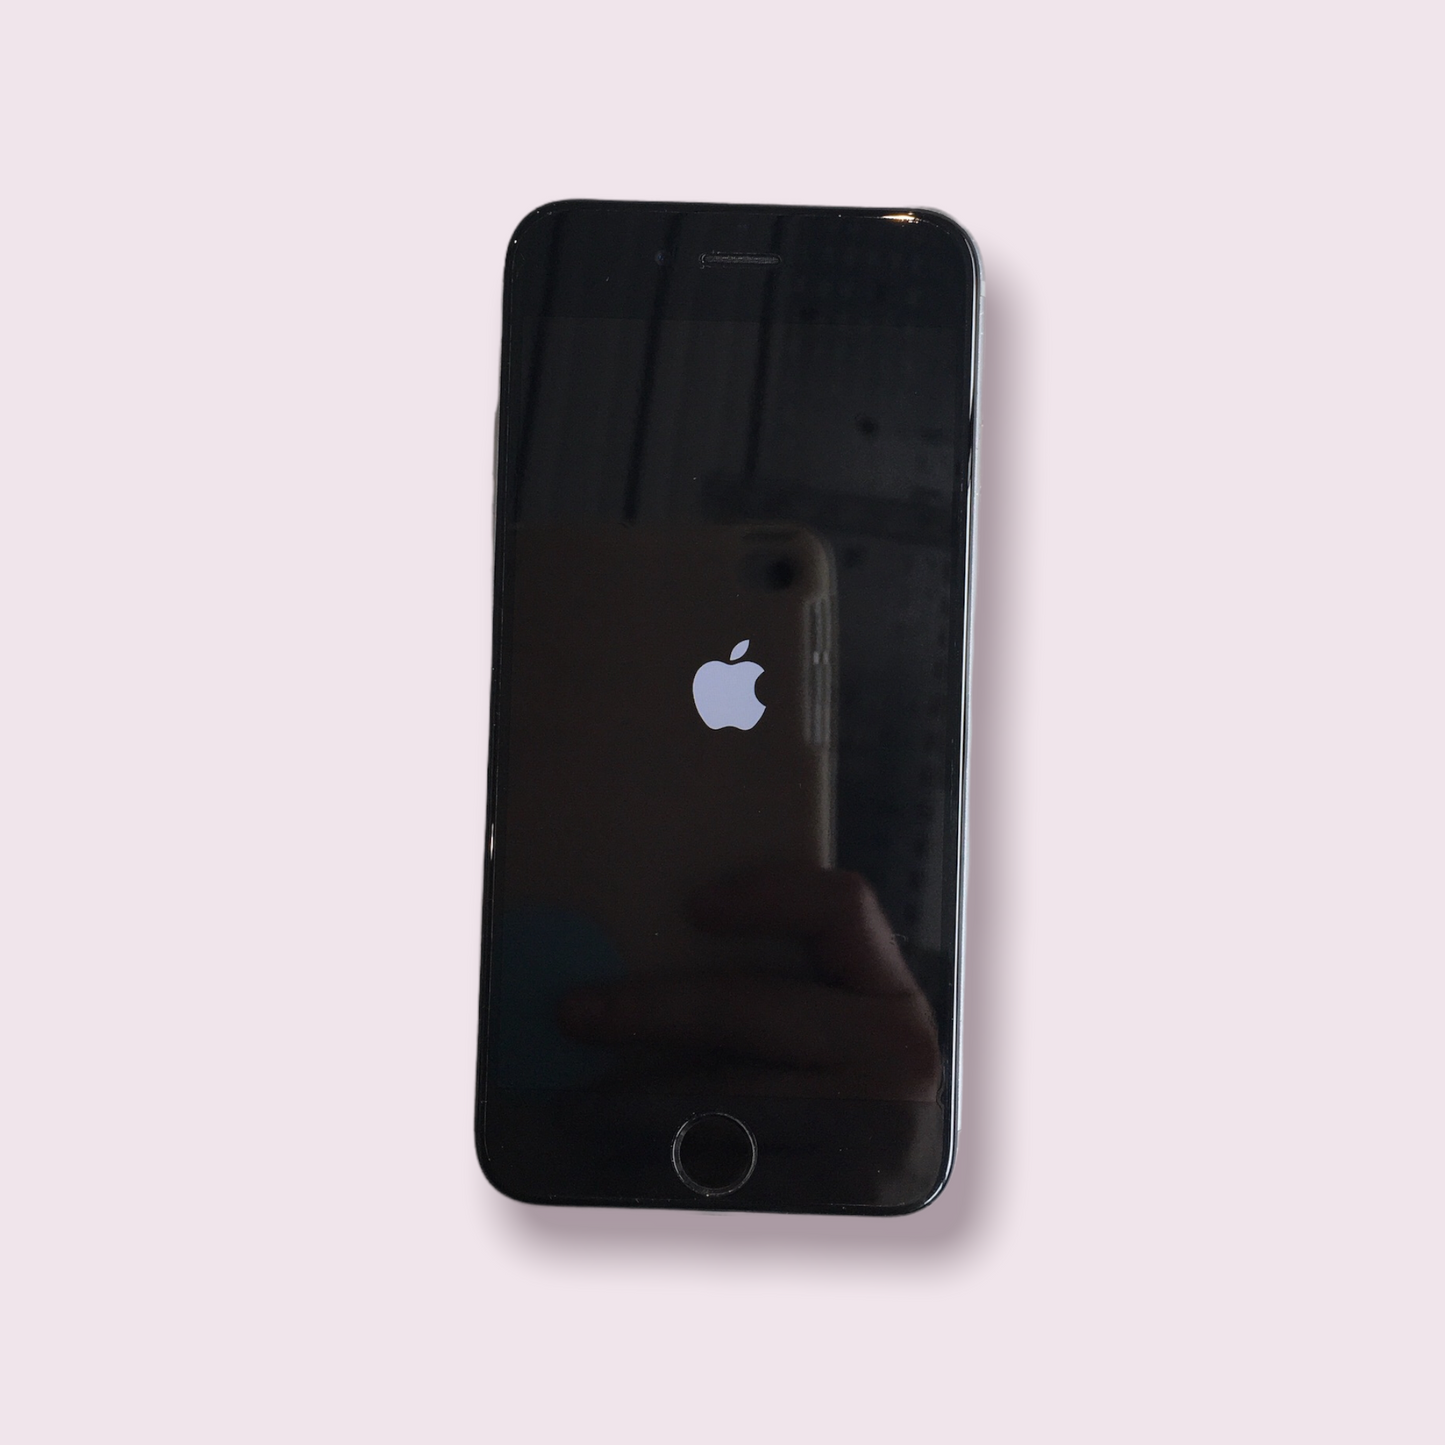 Apple iPhone 6S 32GB Space Grey - Unlocked - Grade B+